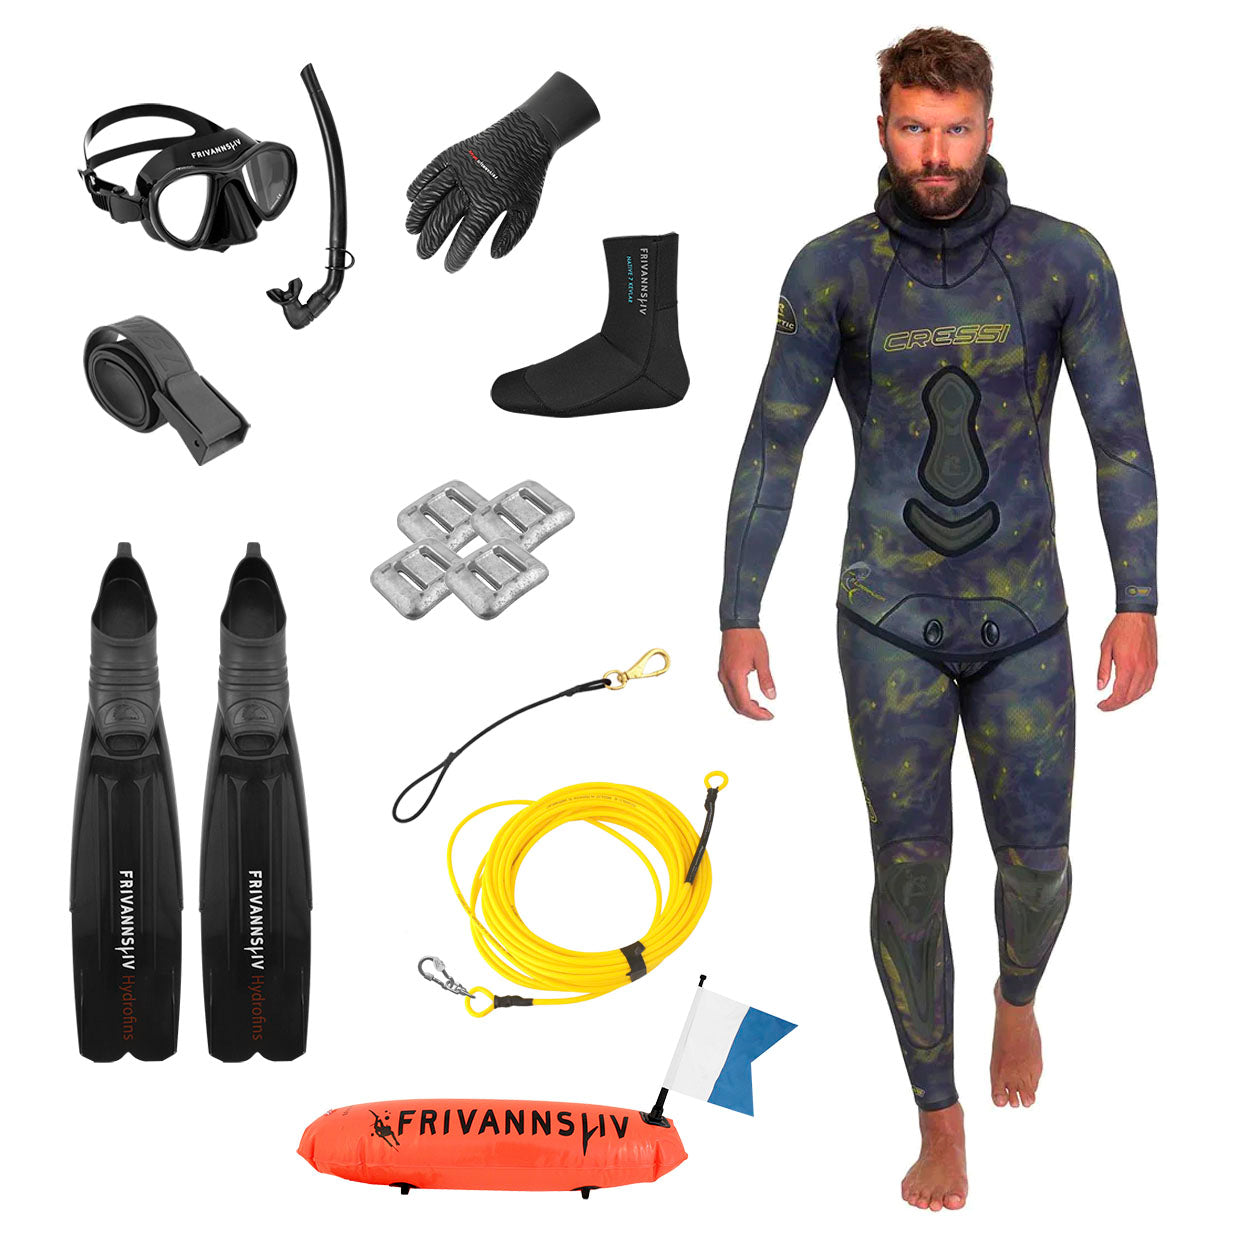 Freediving equipment package